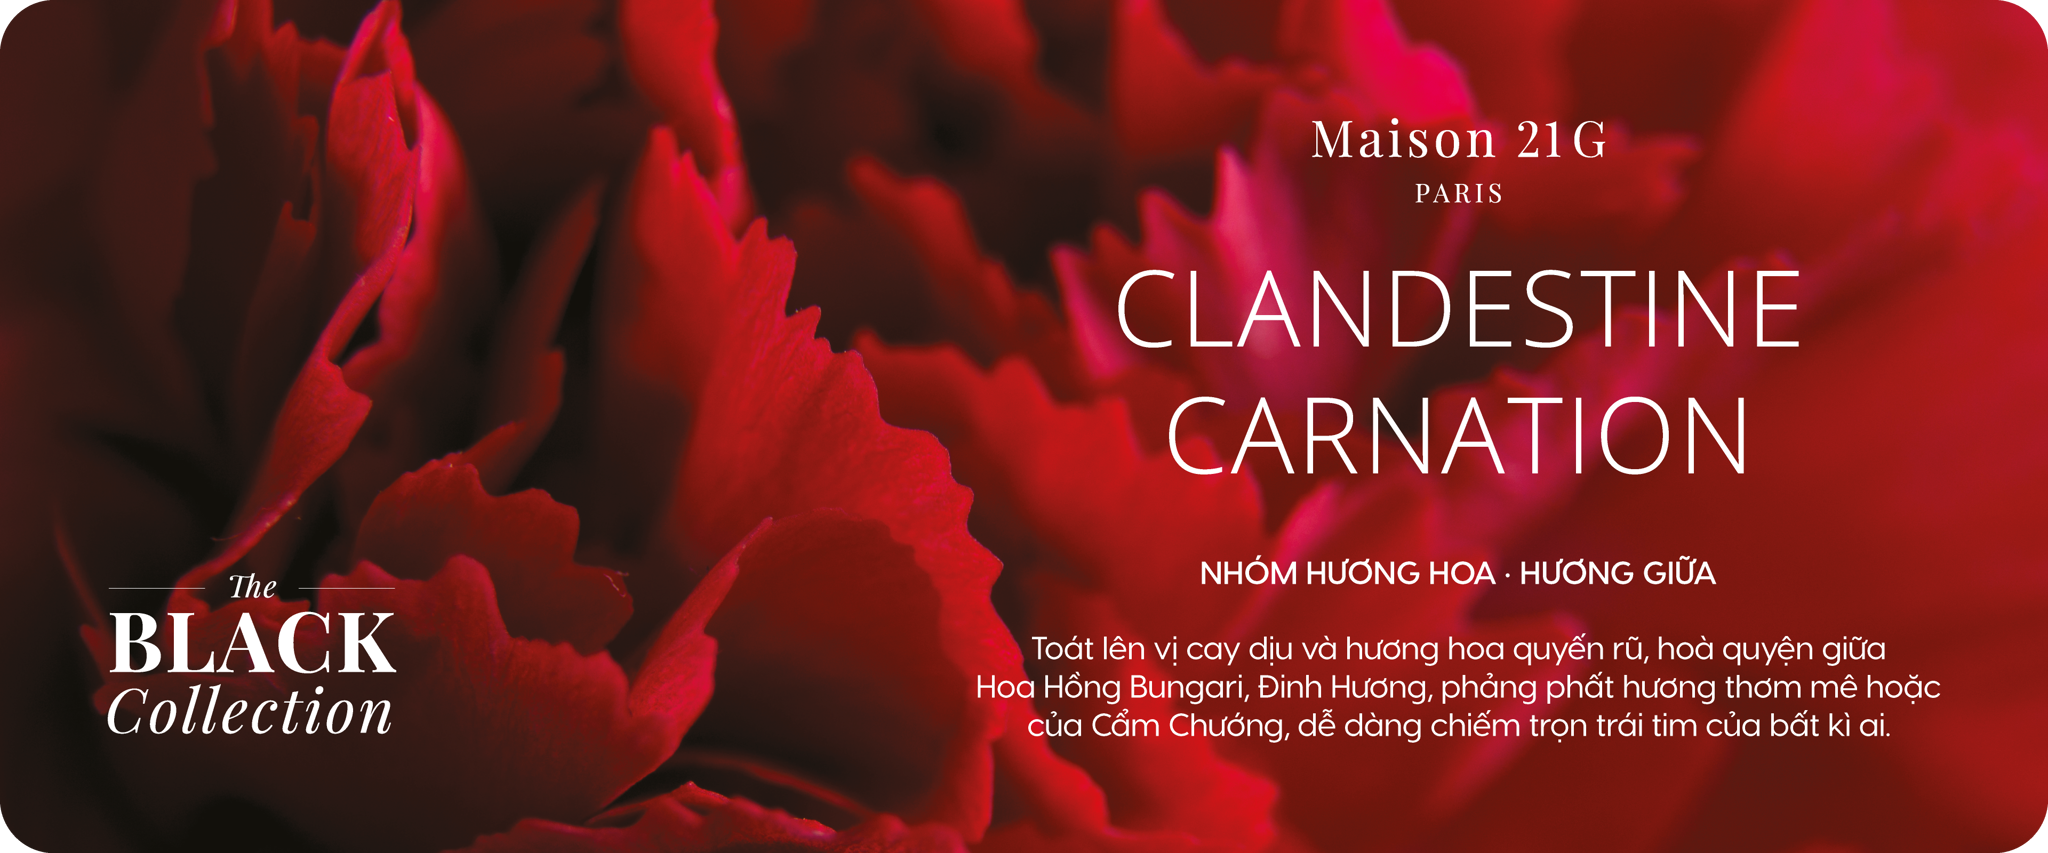 Clandestine Carnation | Black Collection